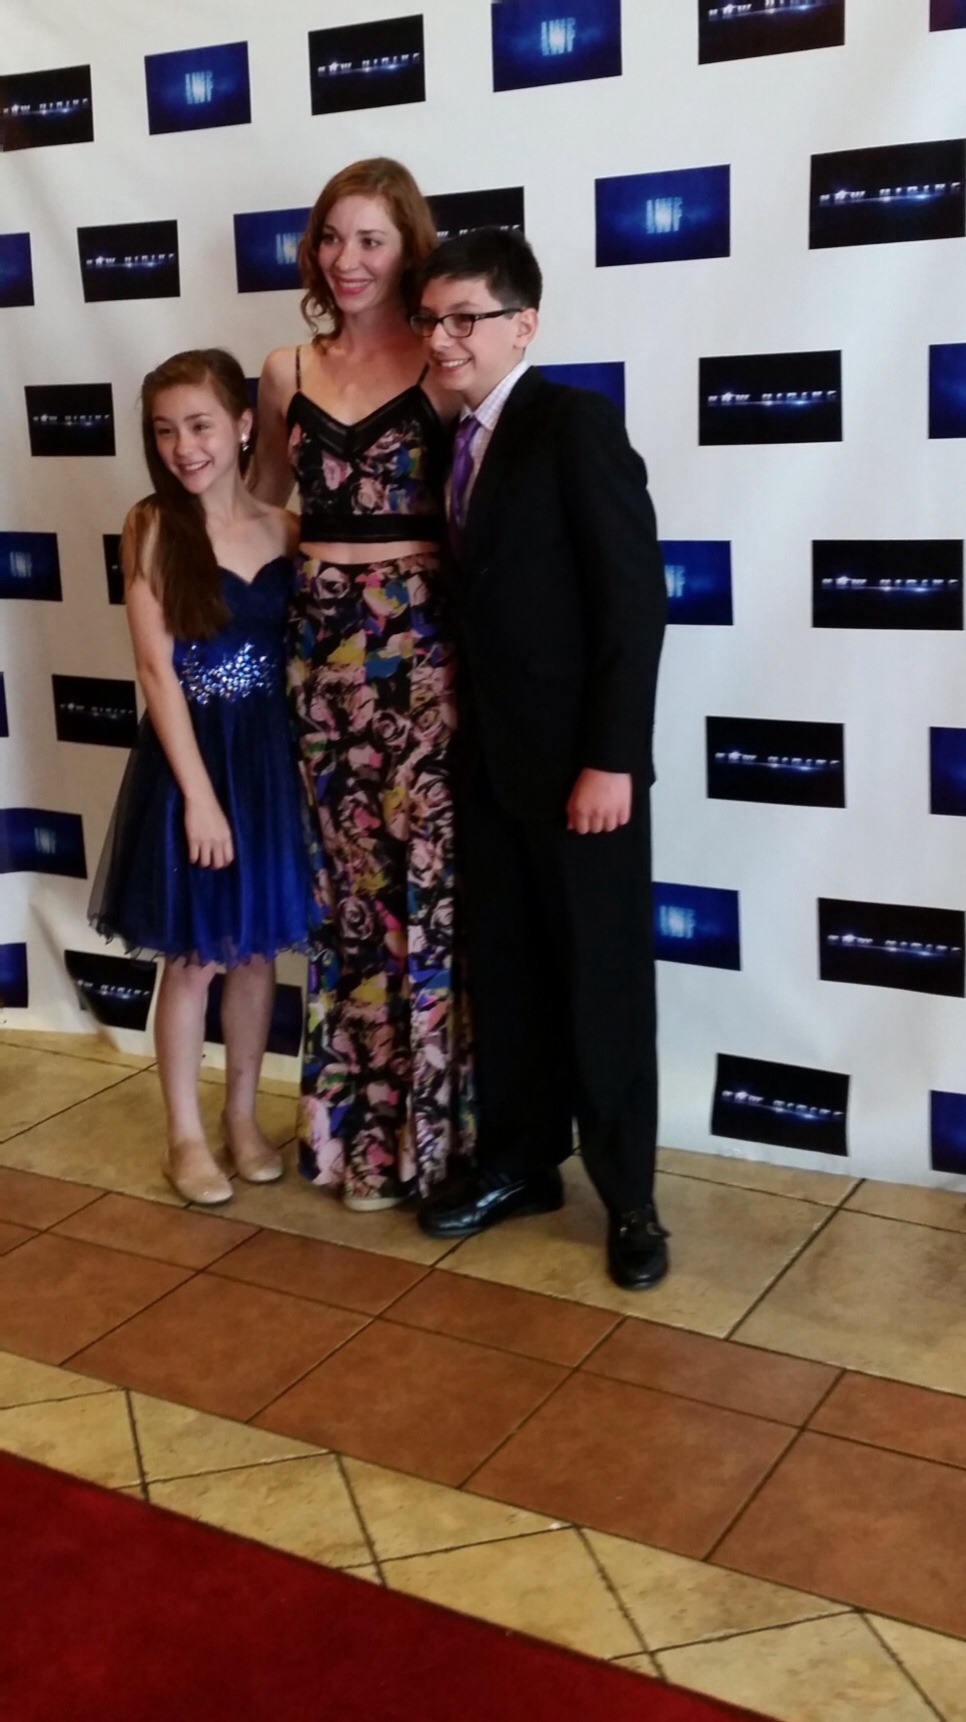 Claire Tablizo, Caitlin Rose Williams, and Evan Materne at the Now Hiring Movie premiere in San Antonio, Tx